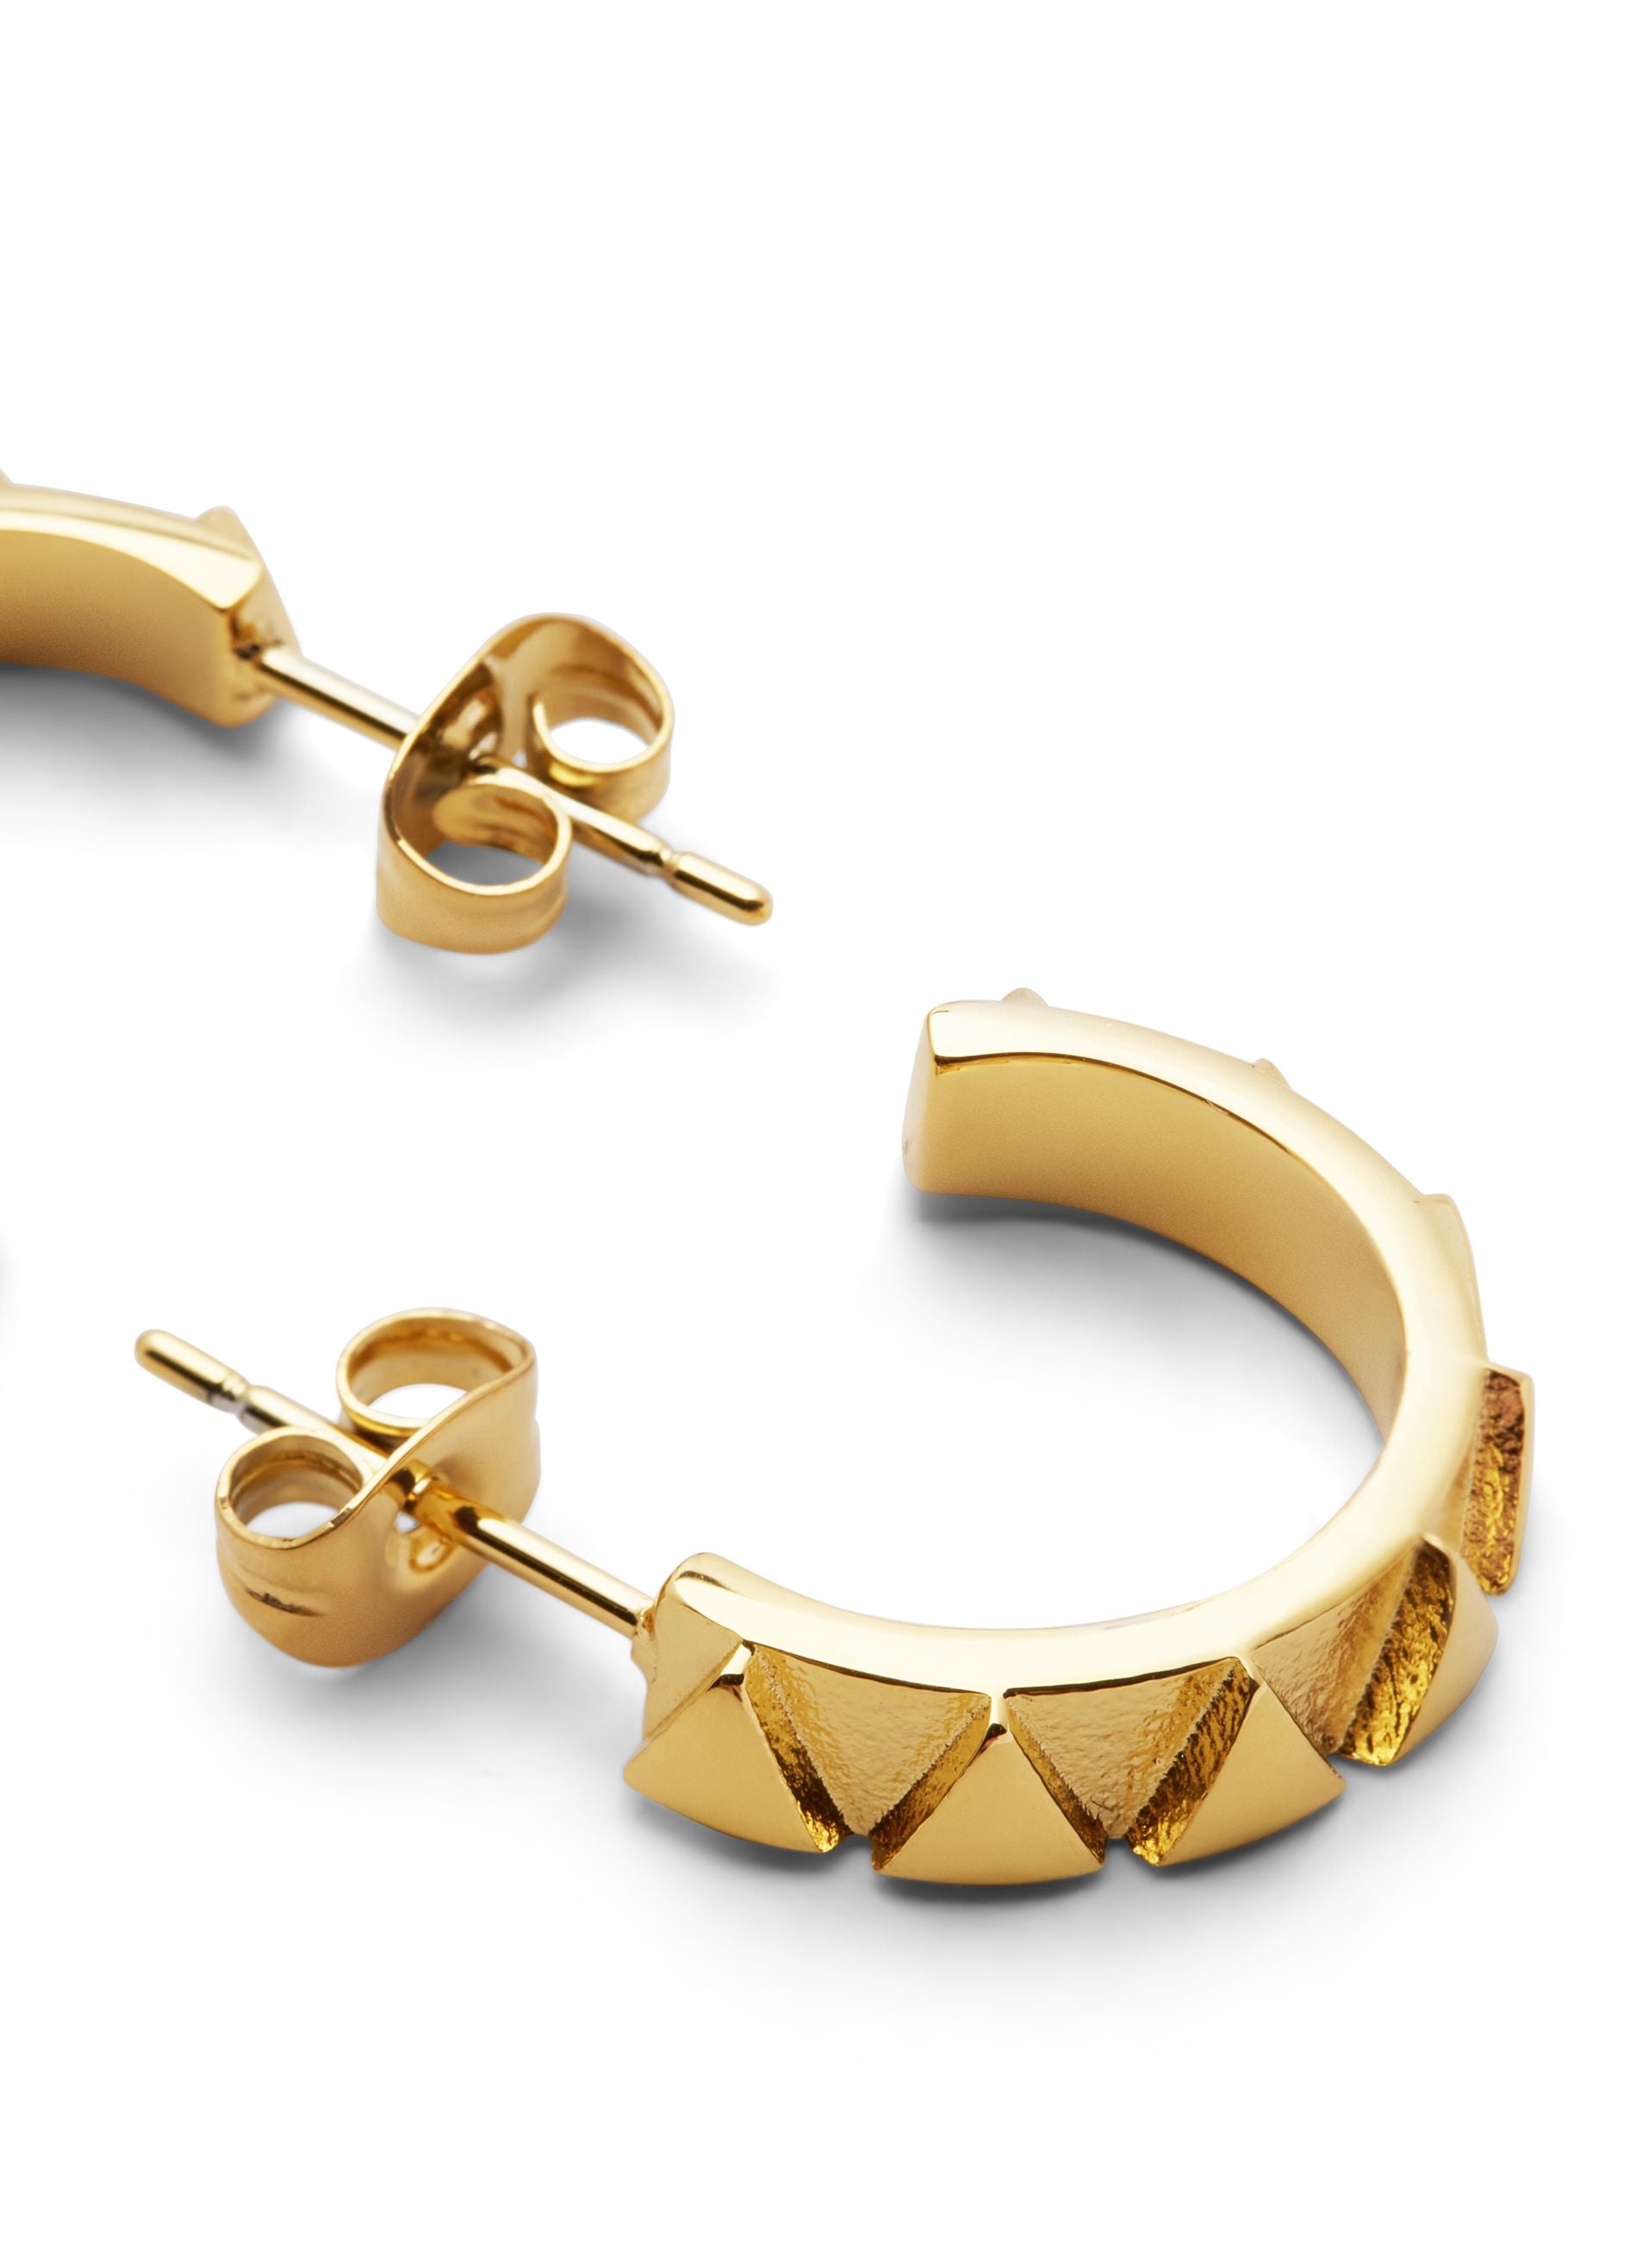 Skultuna Gtg Earrings, Gold Plated